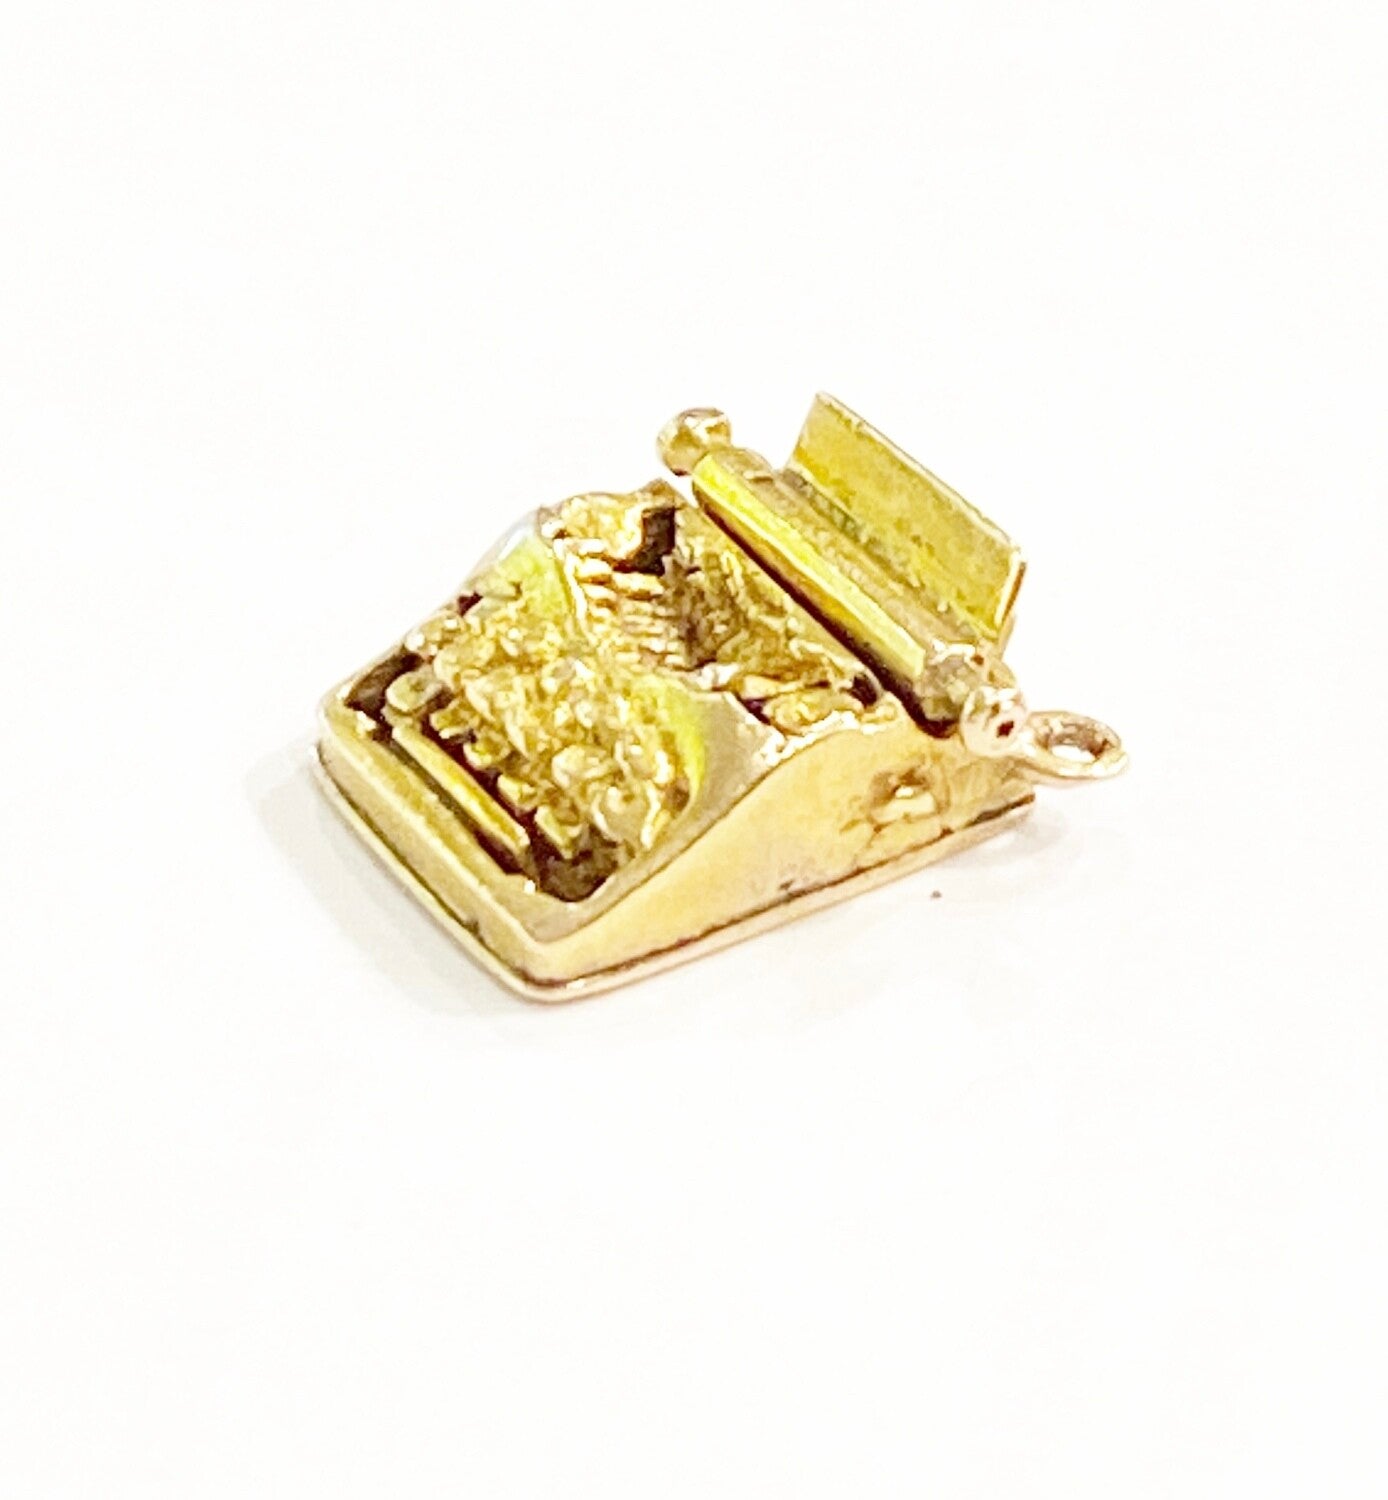 9ct 375 vintage gold type writer charm circa 1959